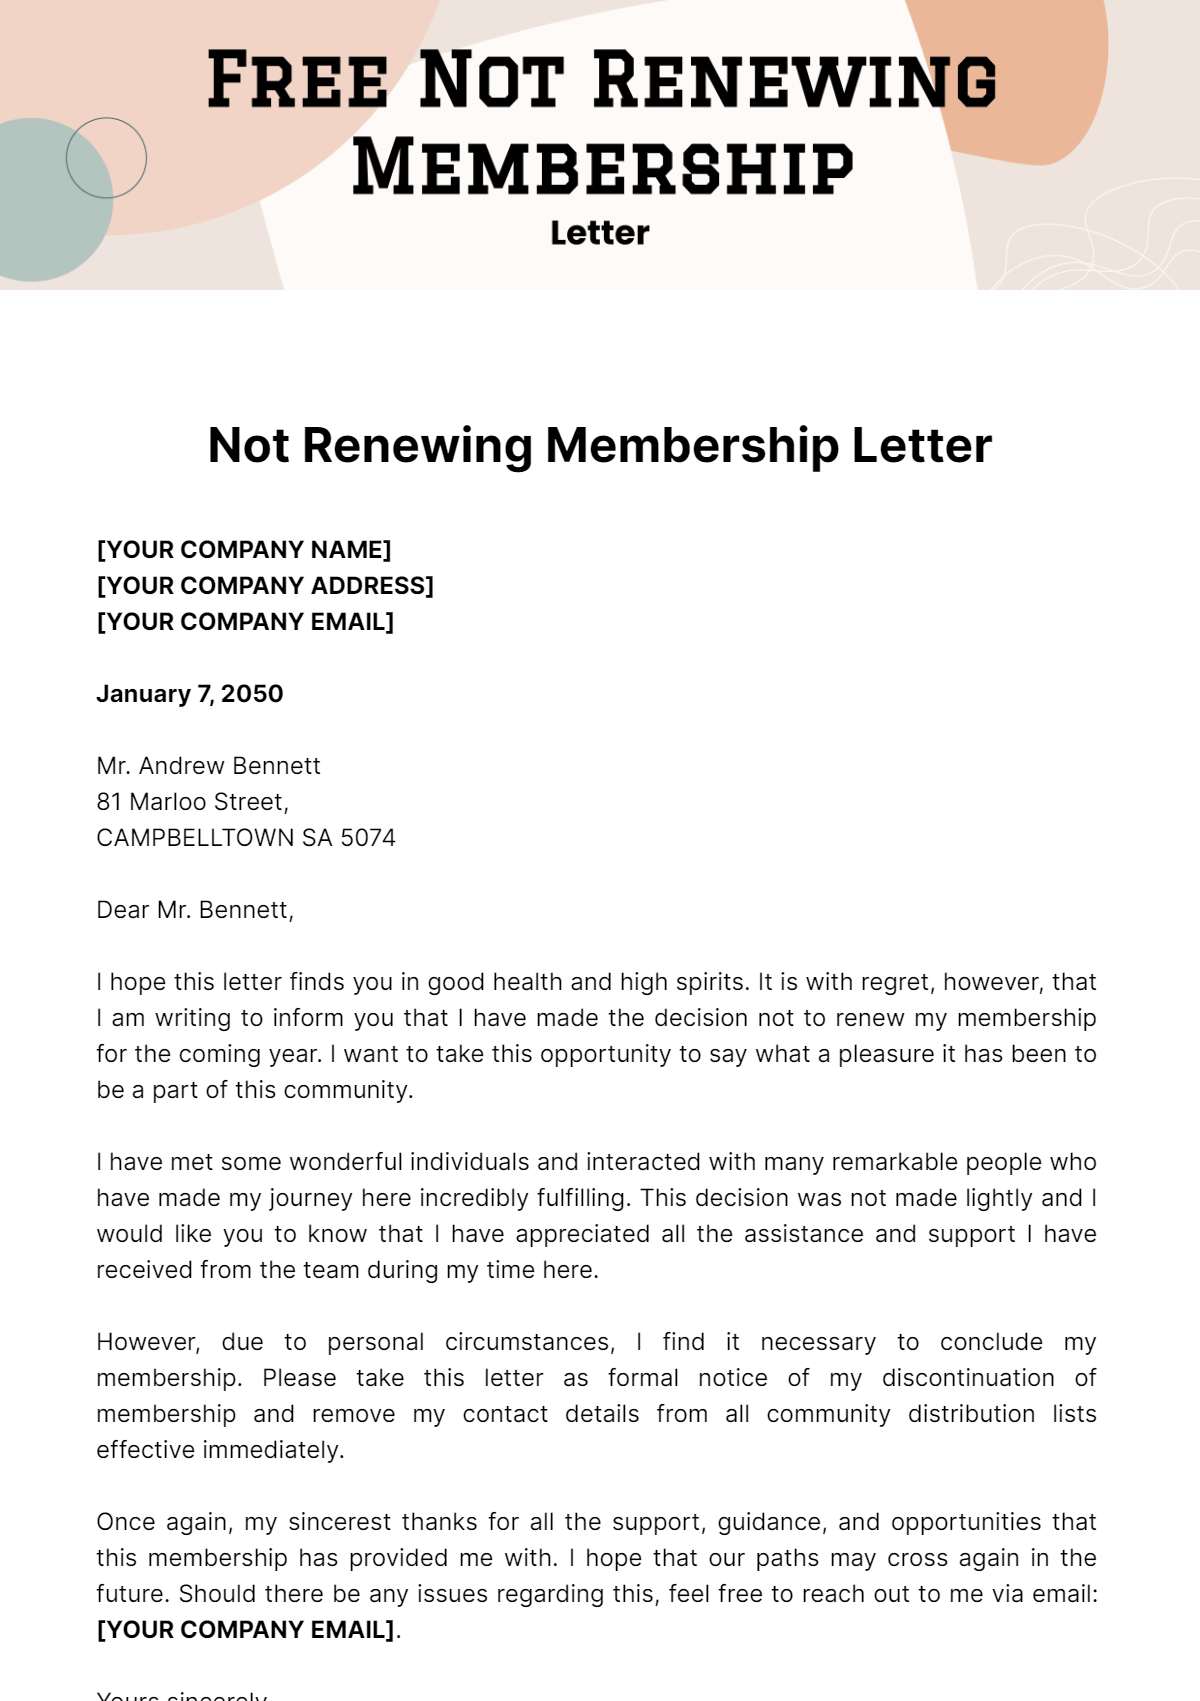 Free Not Renewing Membership Letter Template